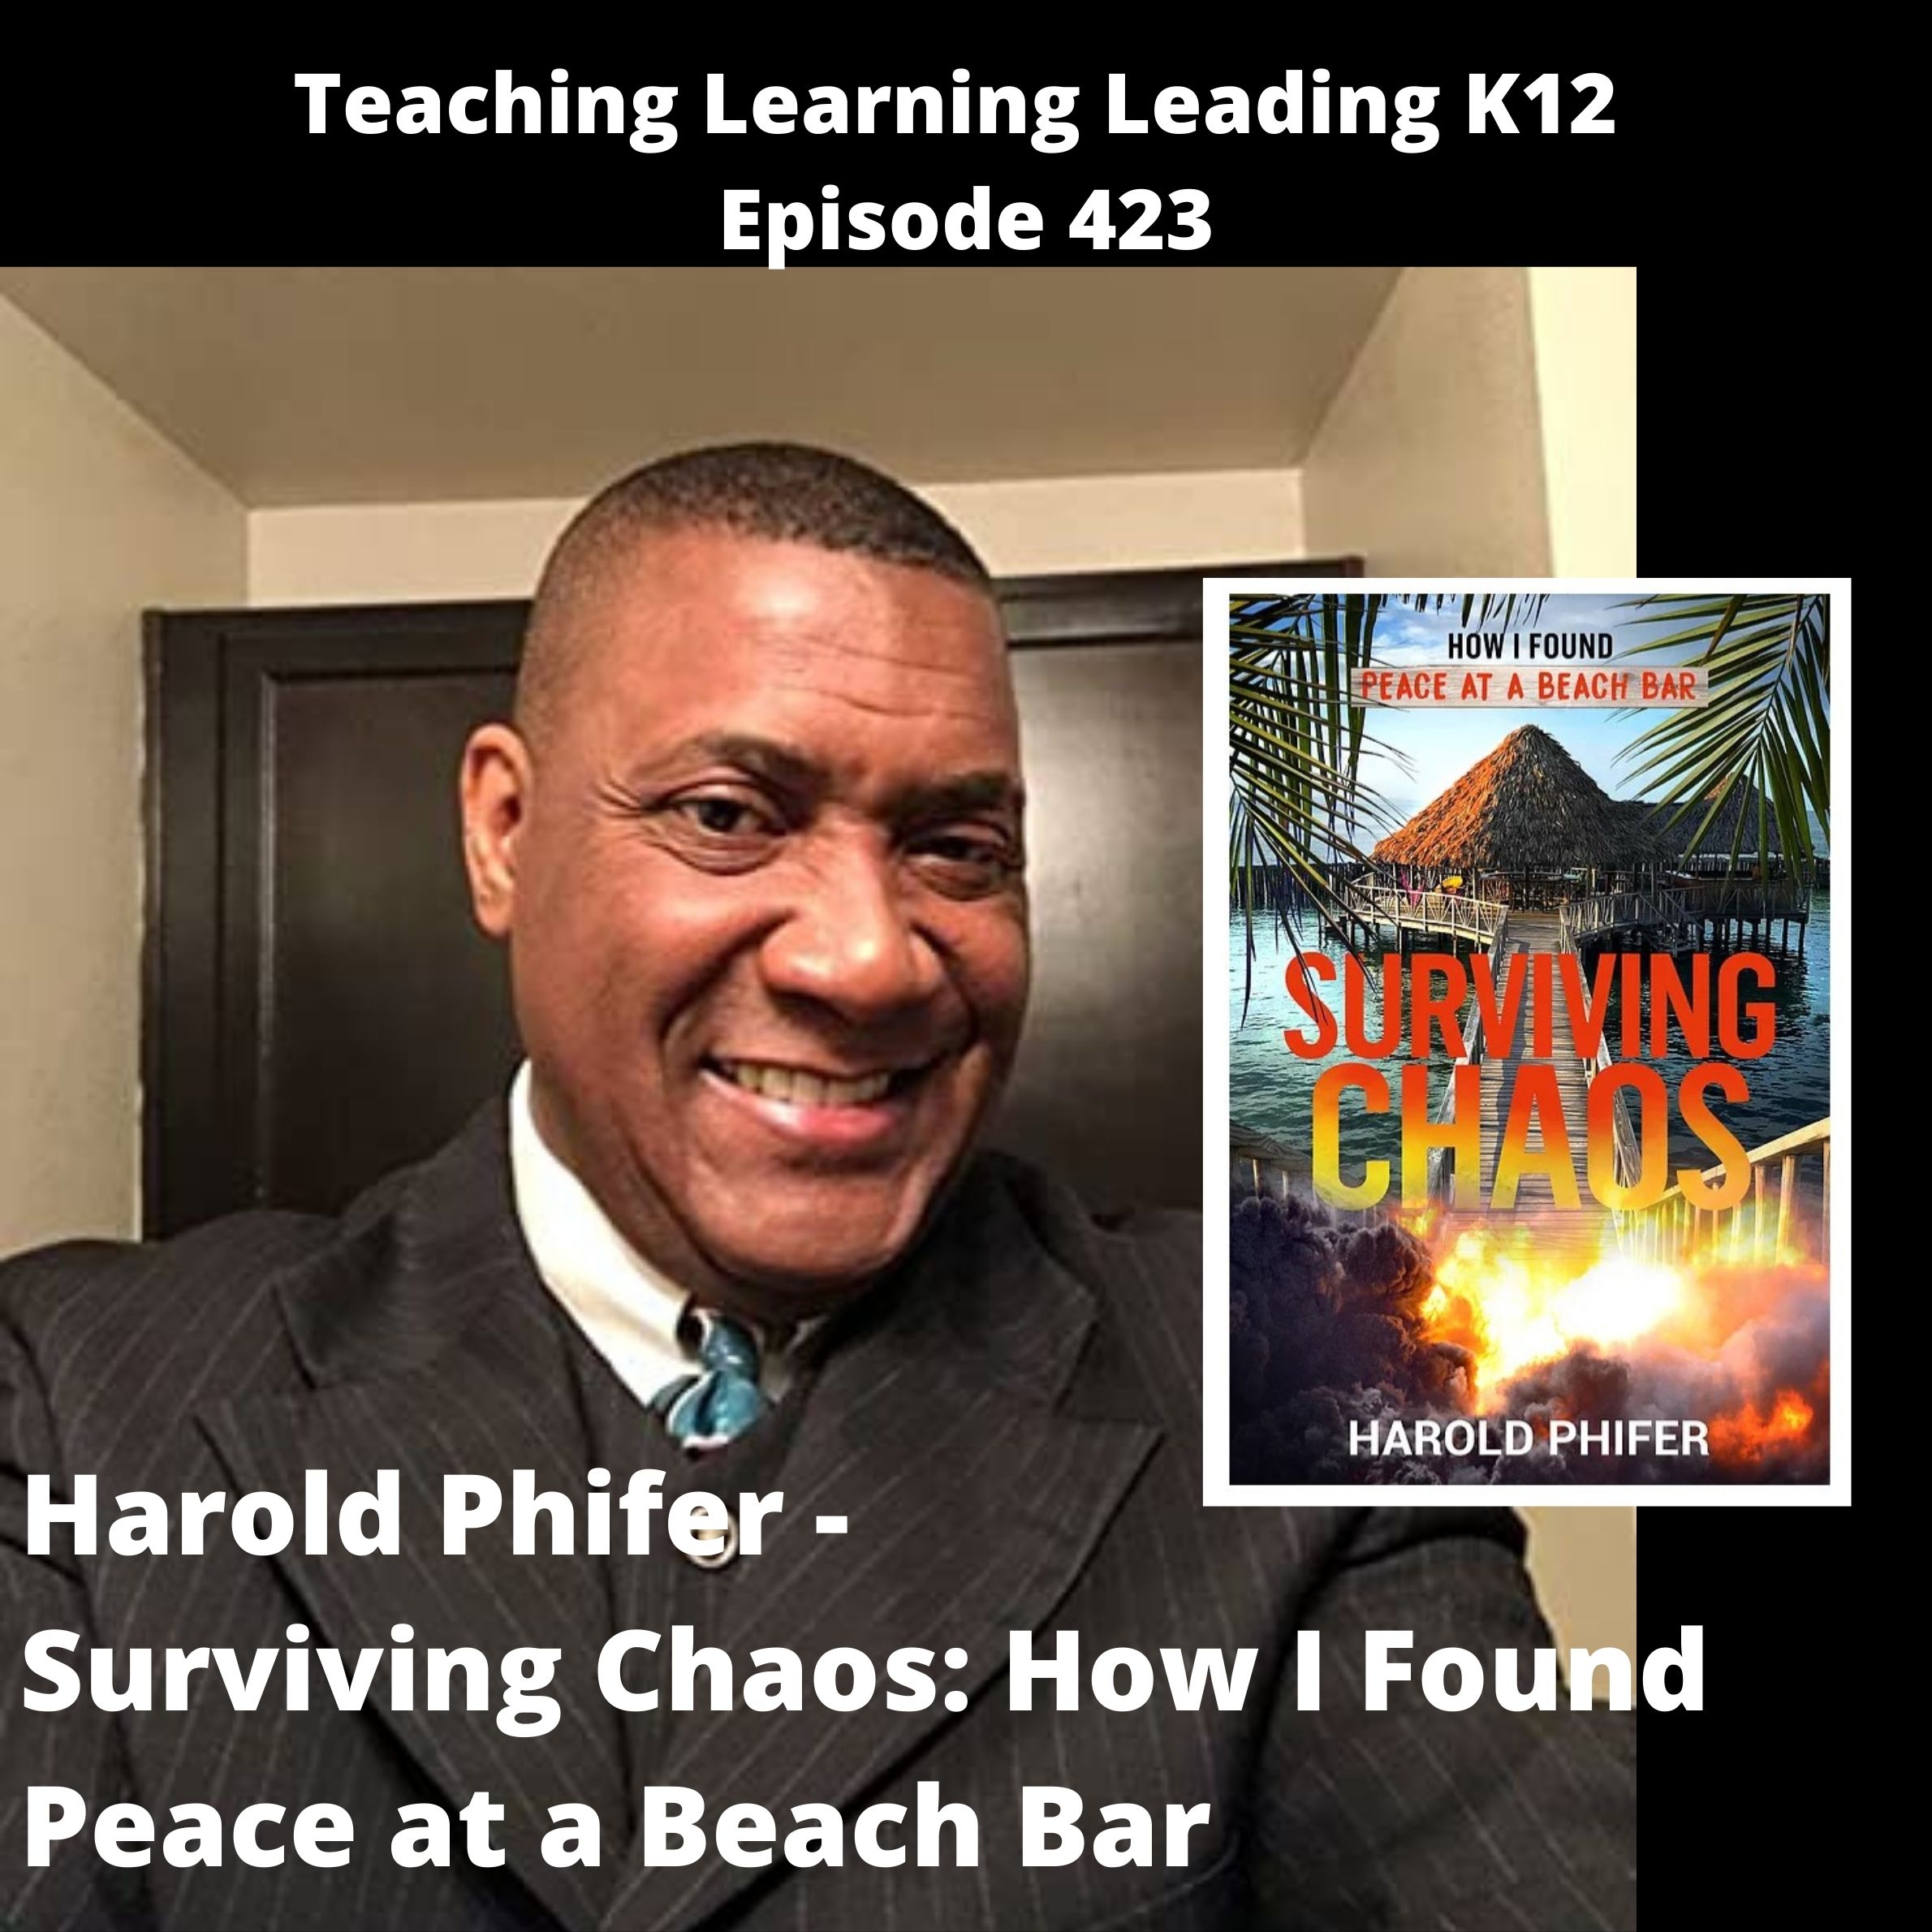 Harold Phifer - Surviving Chaos: How I Found Peace at a Beach Bar - 423 Image